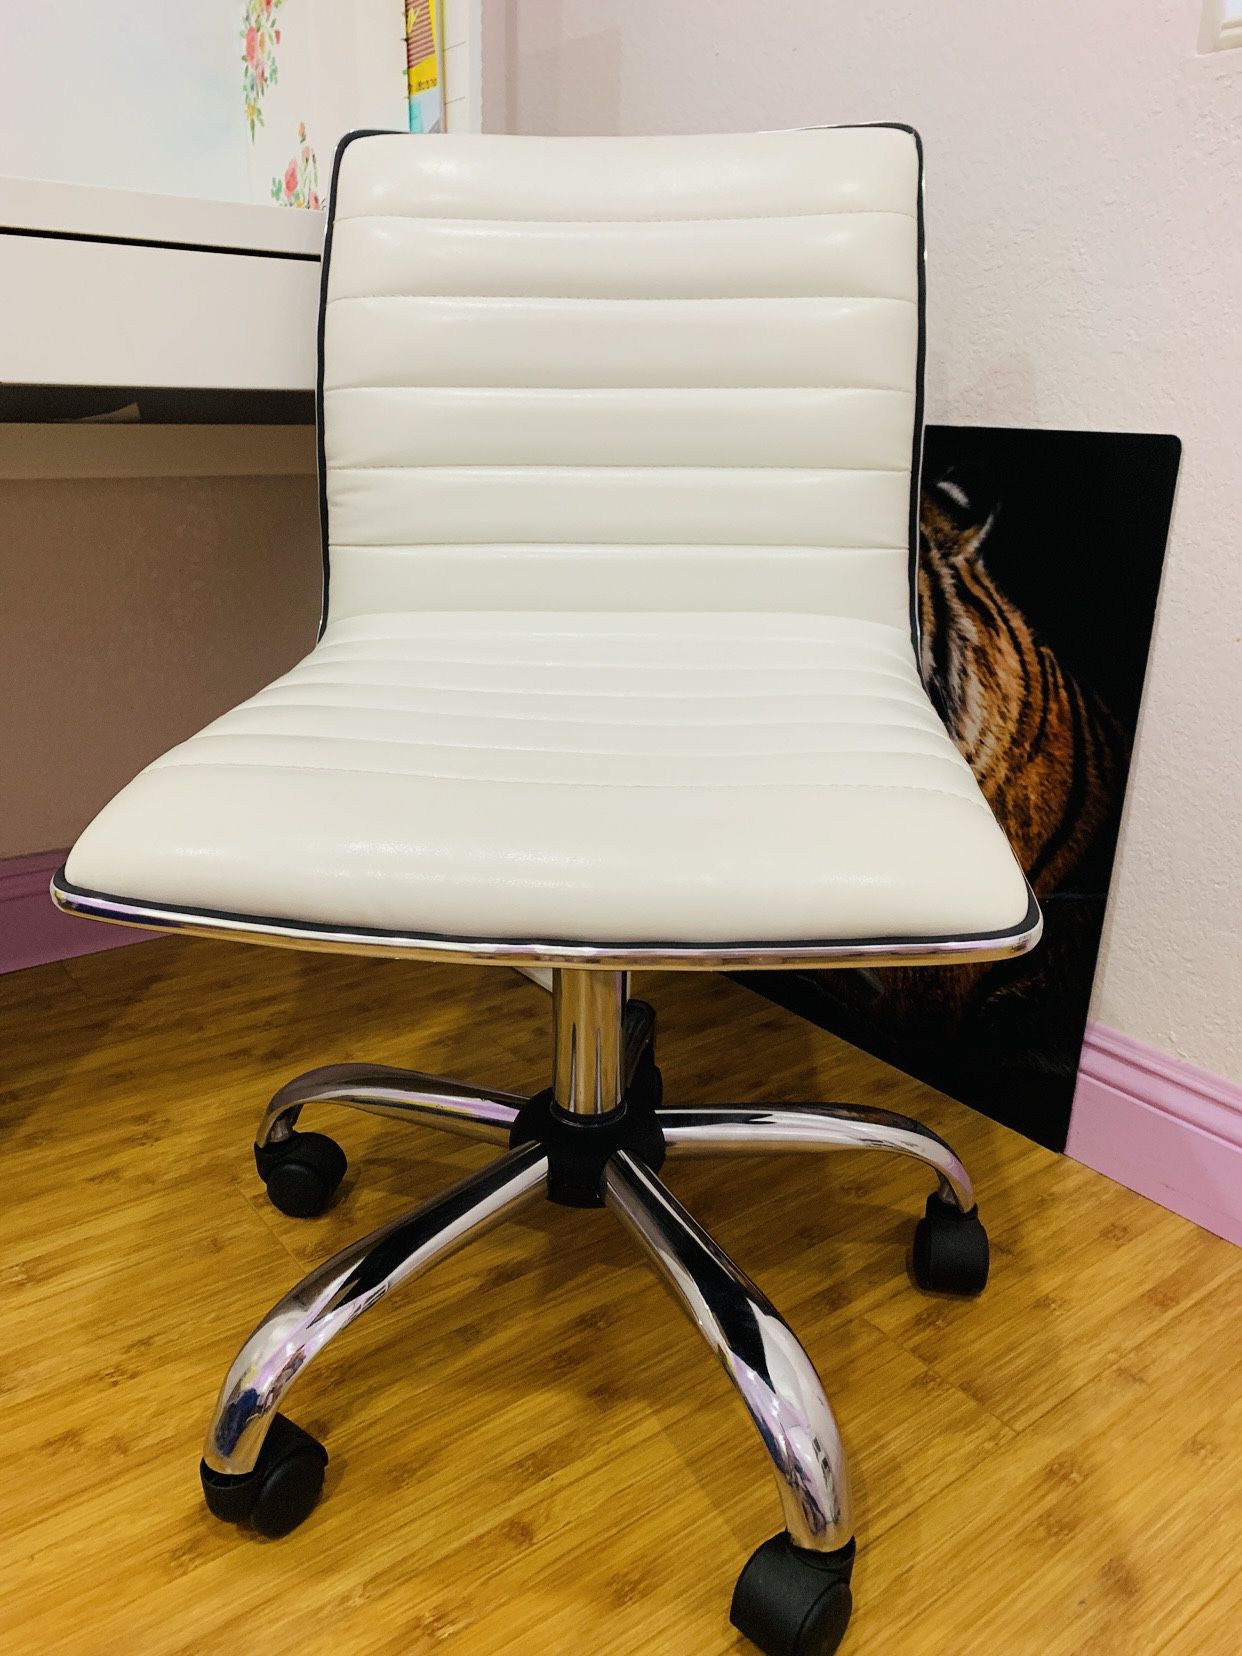 White computer desk chair